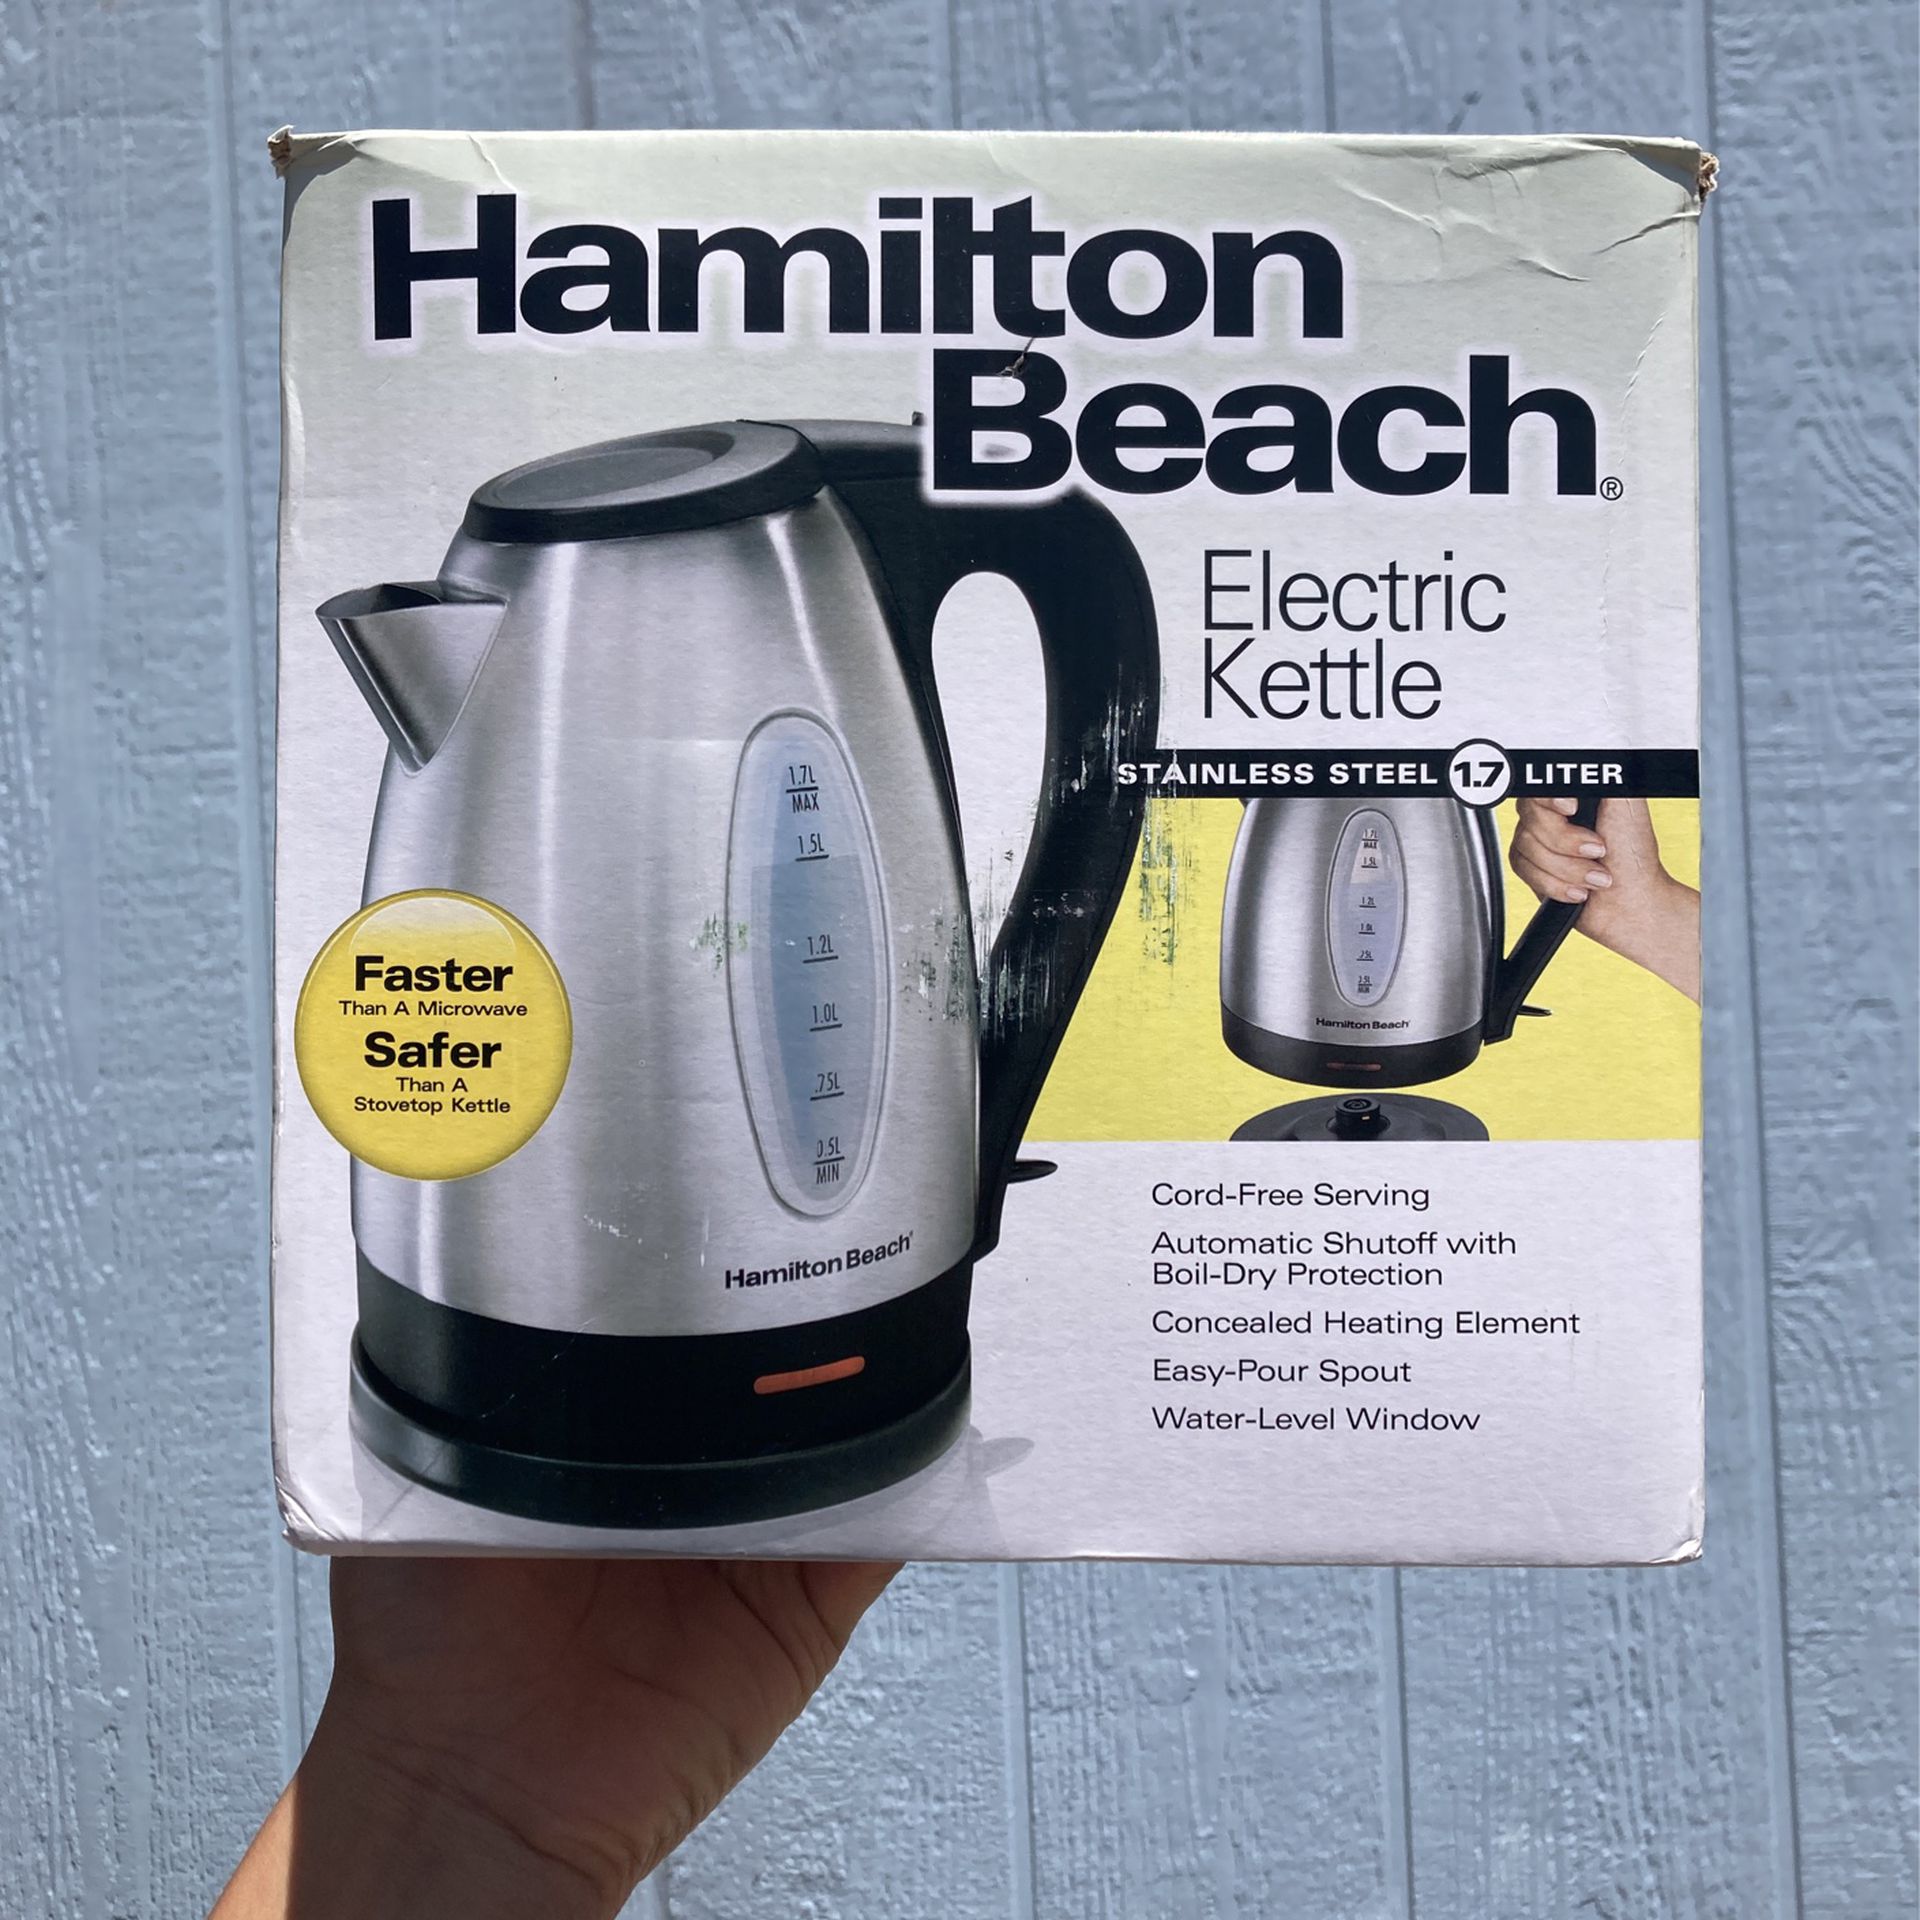 Hamilton Beach 1.7-Liter Electric Kettle - Stainless Steel